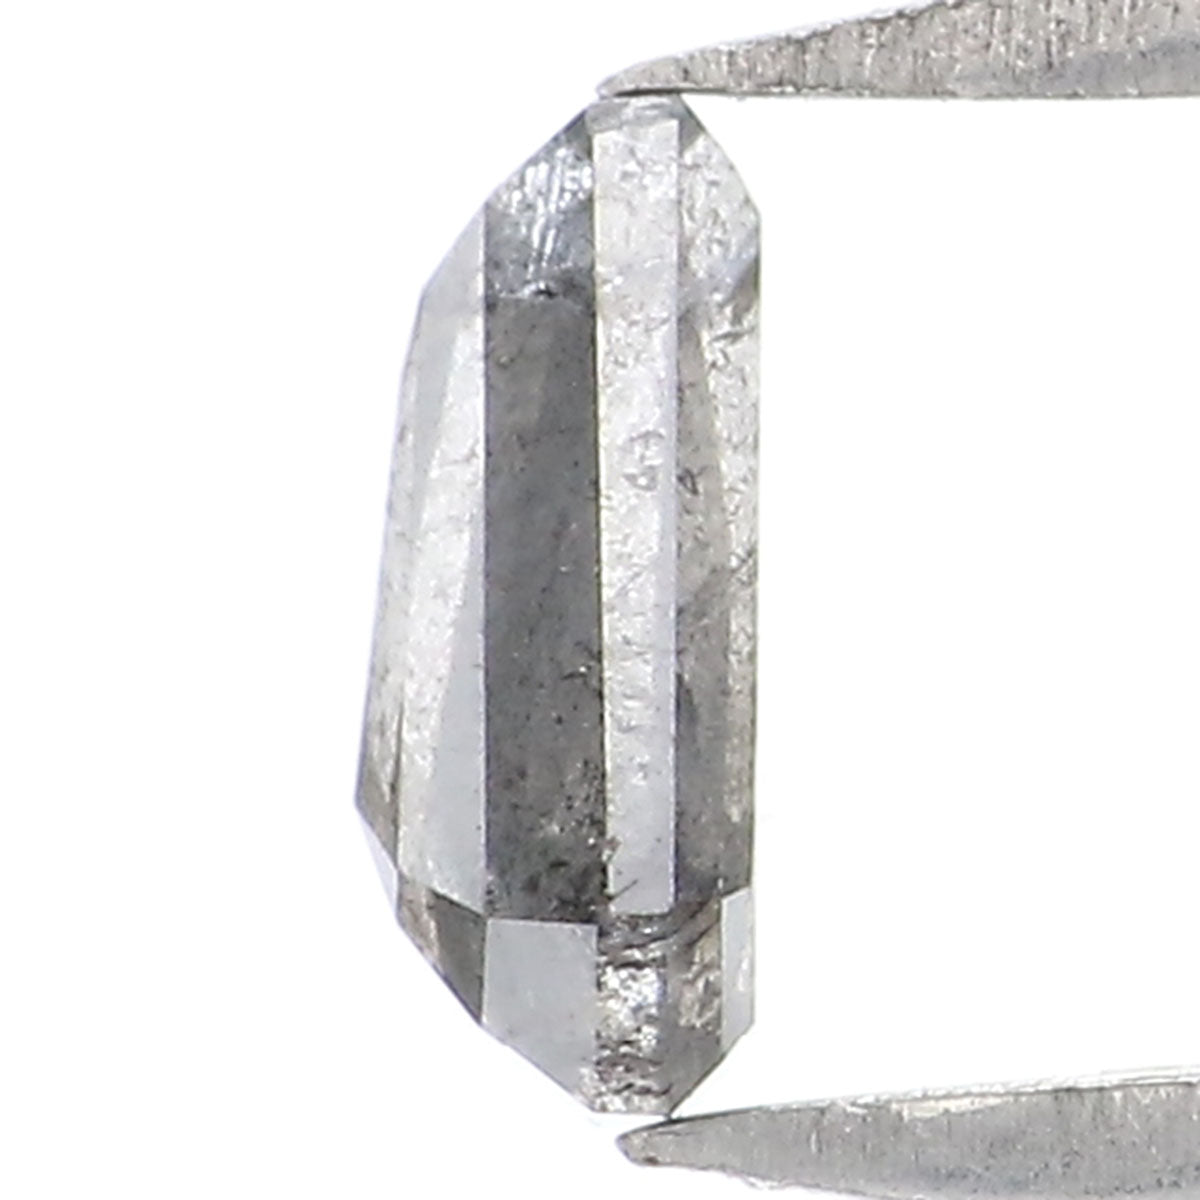 Natural Loose Coffin Salt And Pepper Diamond Black Grey Color 0.42 CT 5.56 MM Coffin Shape Rose Cut Diamond KDL2159